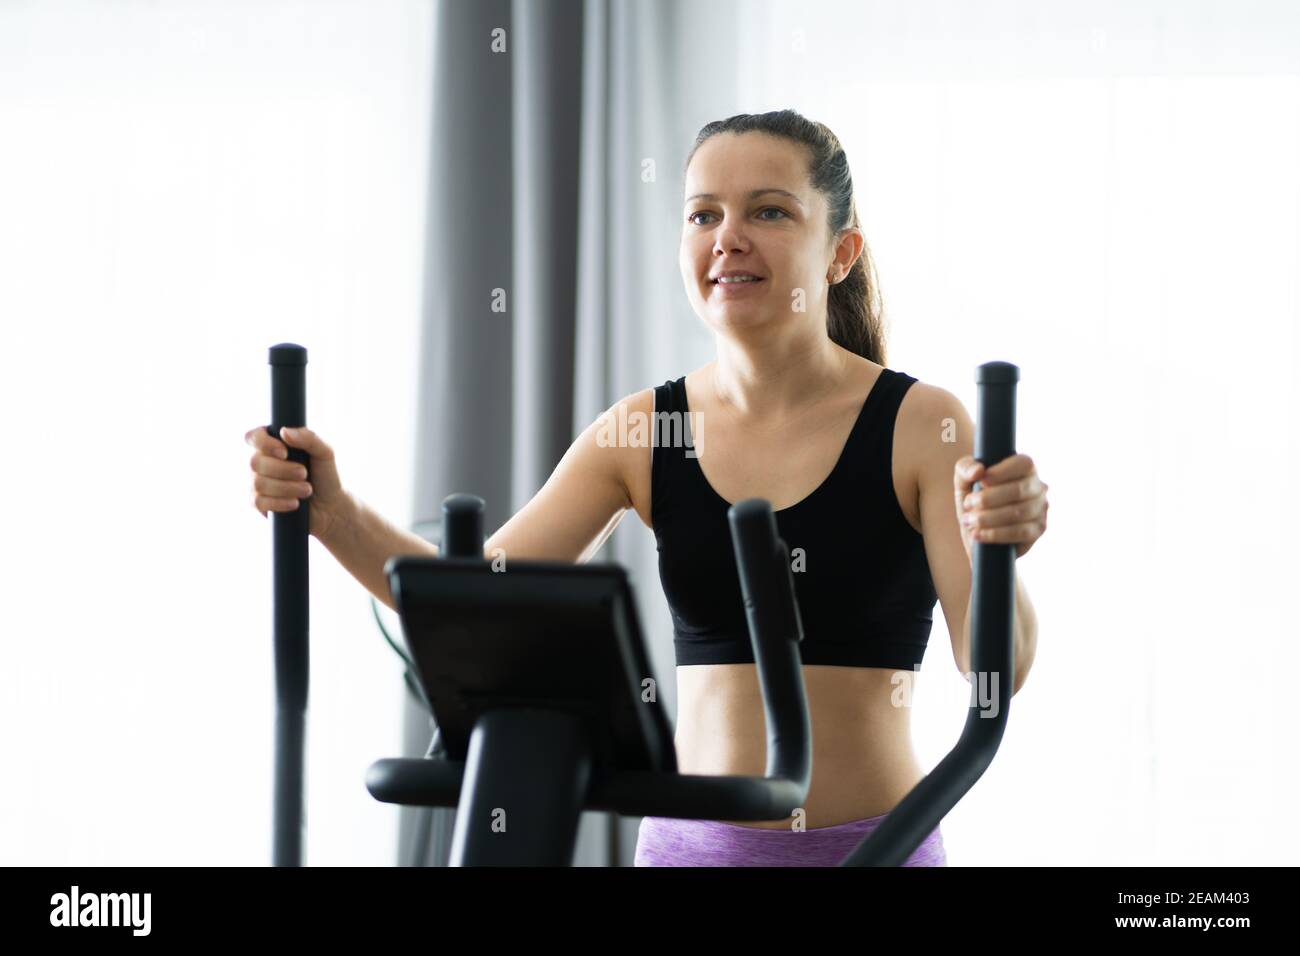 Woman Training On Elliptical Trainer Stock Photo